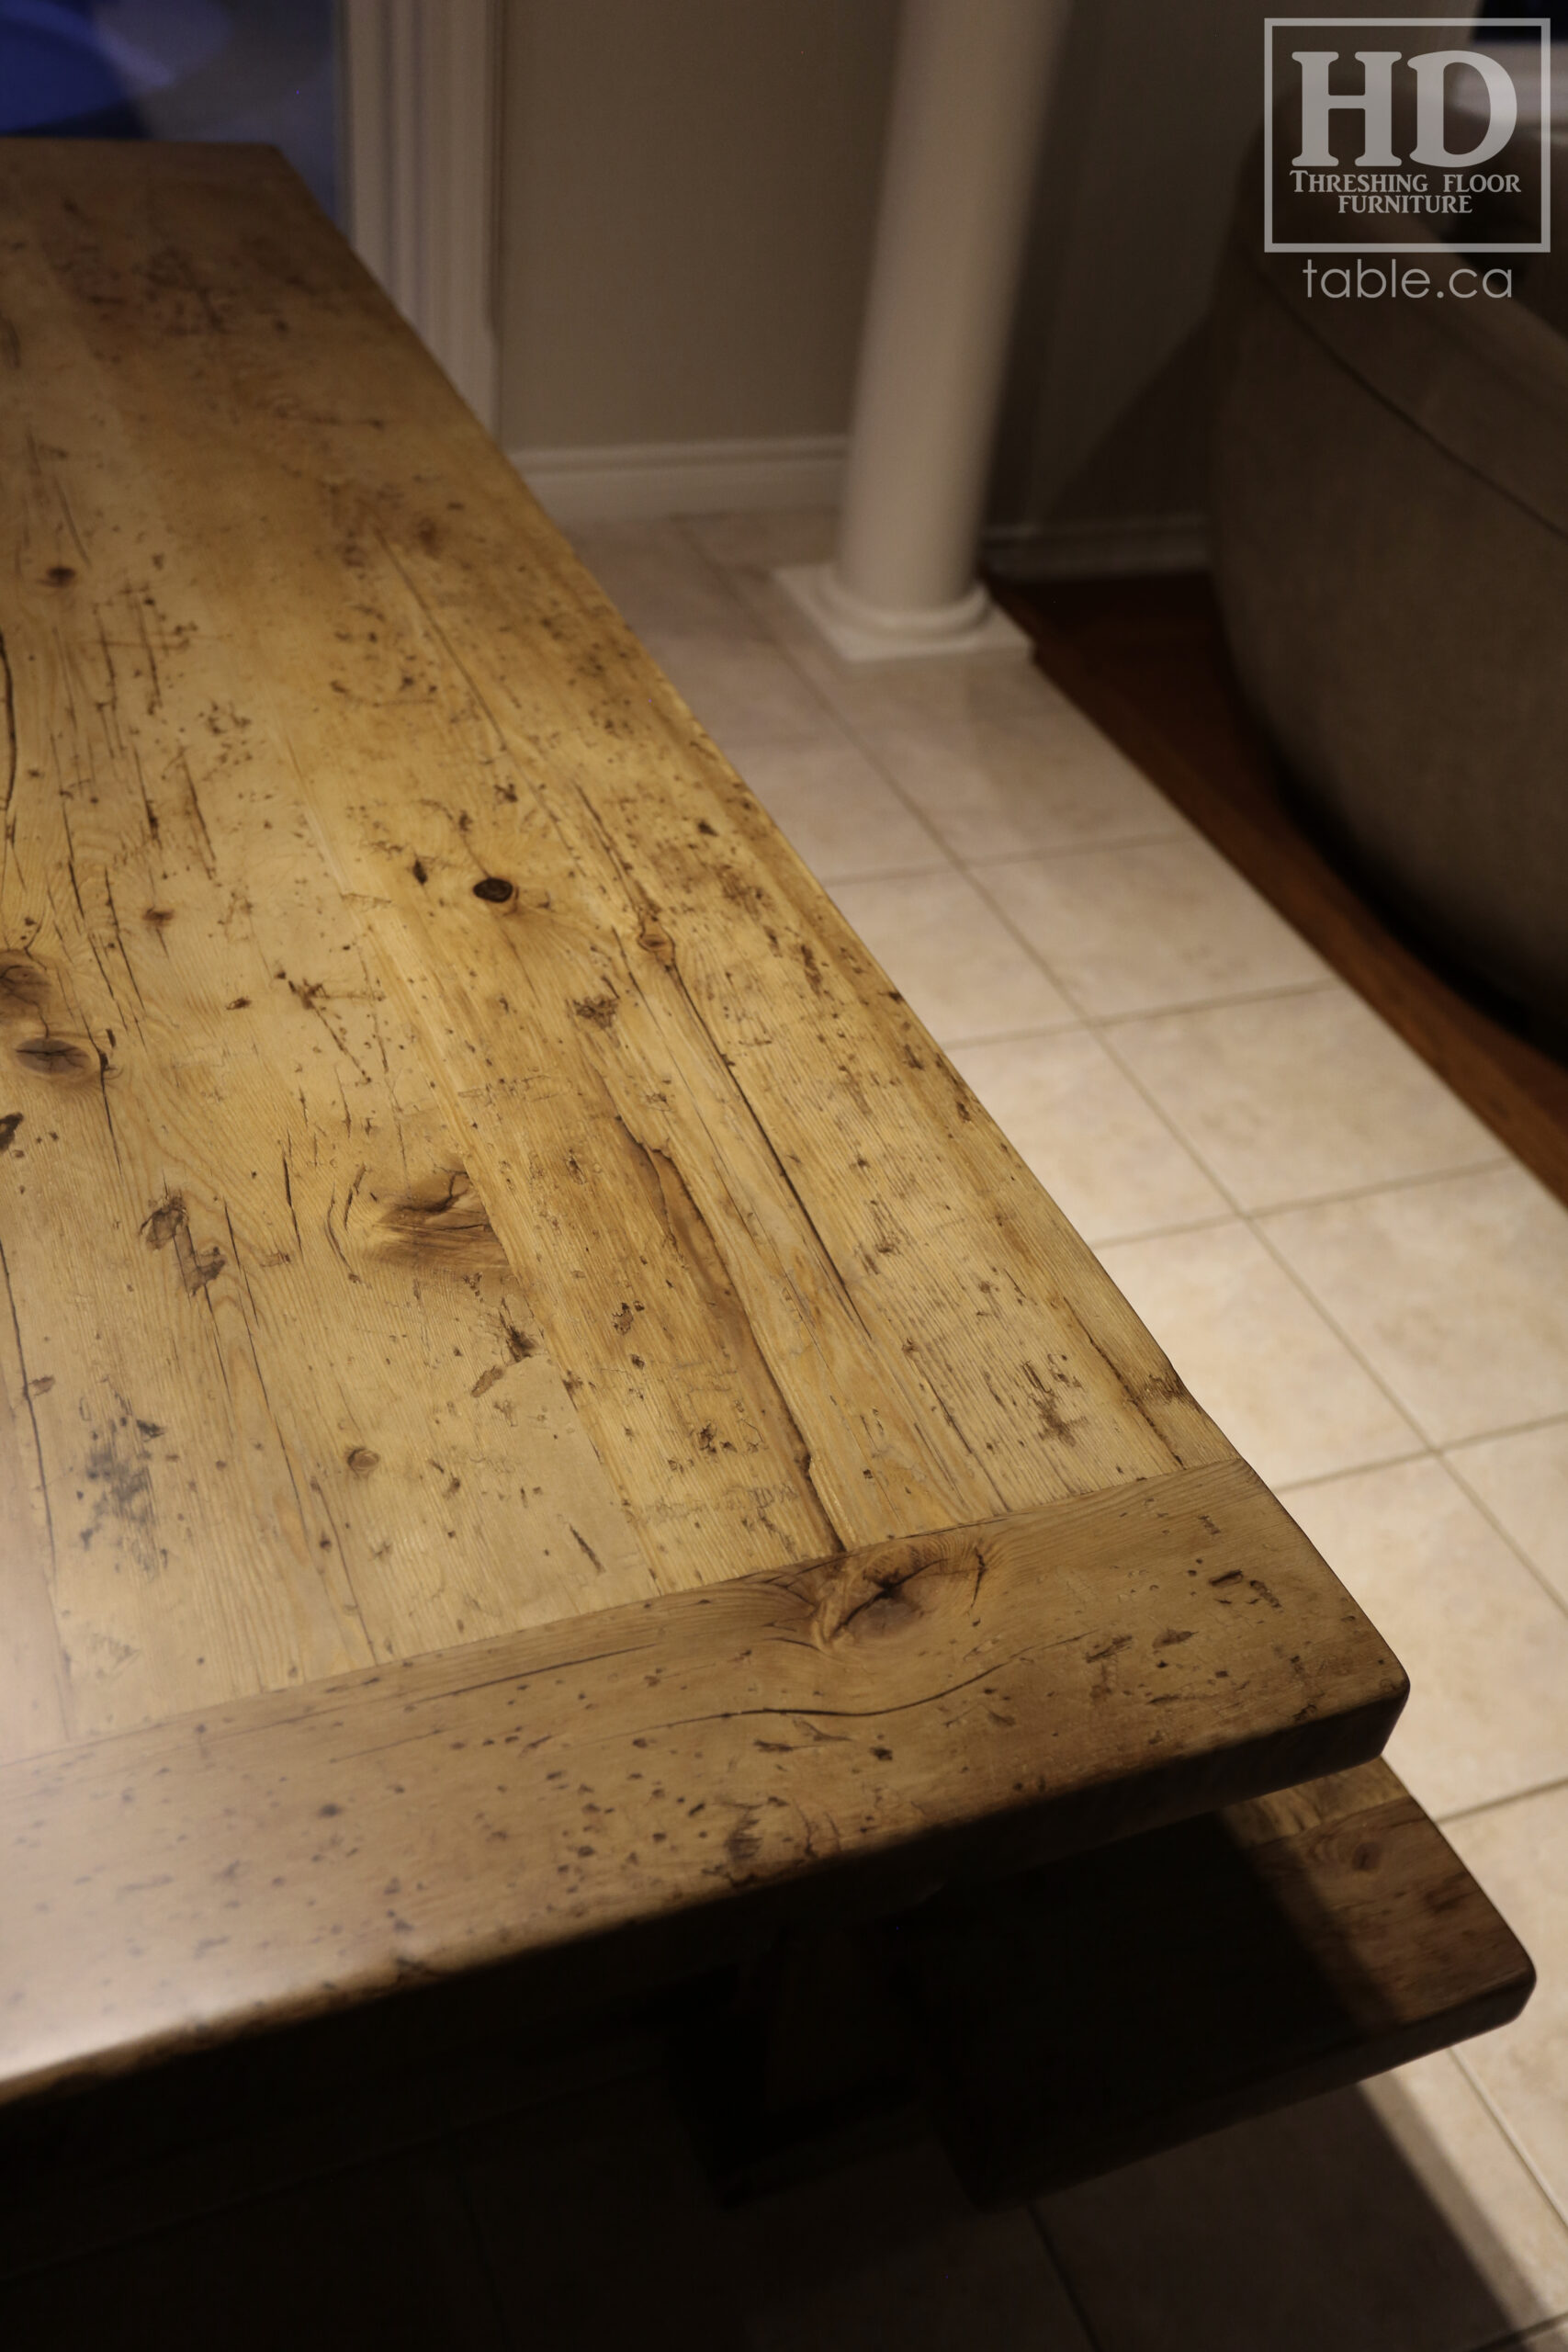 Ontario Barnboard Table by HD Threshing Floor Furniture / www.table.ca